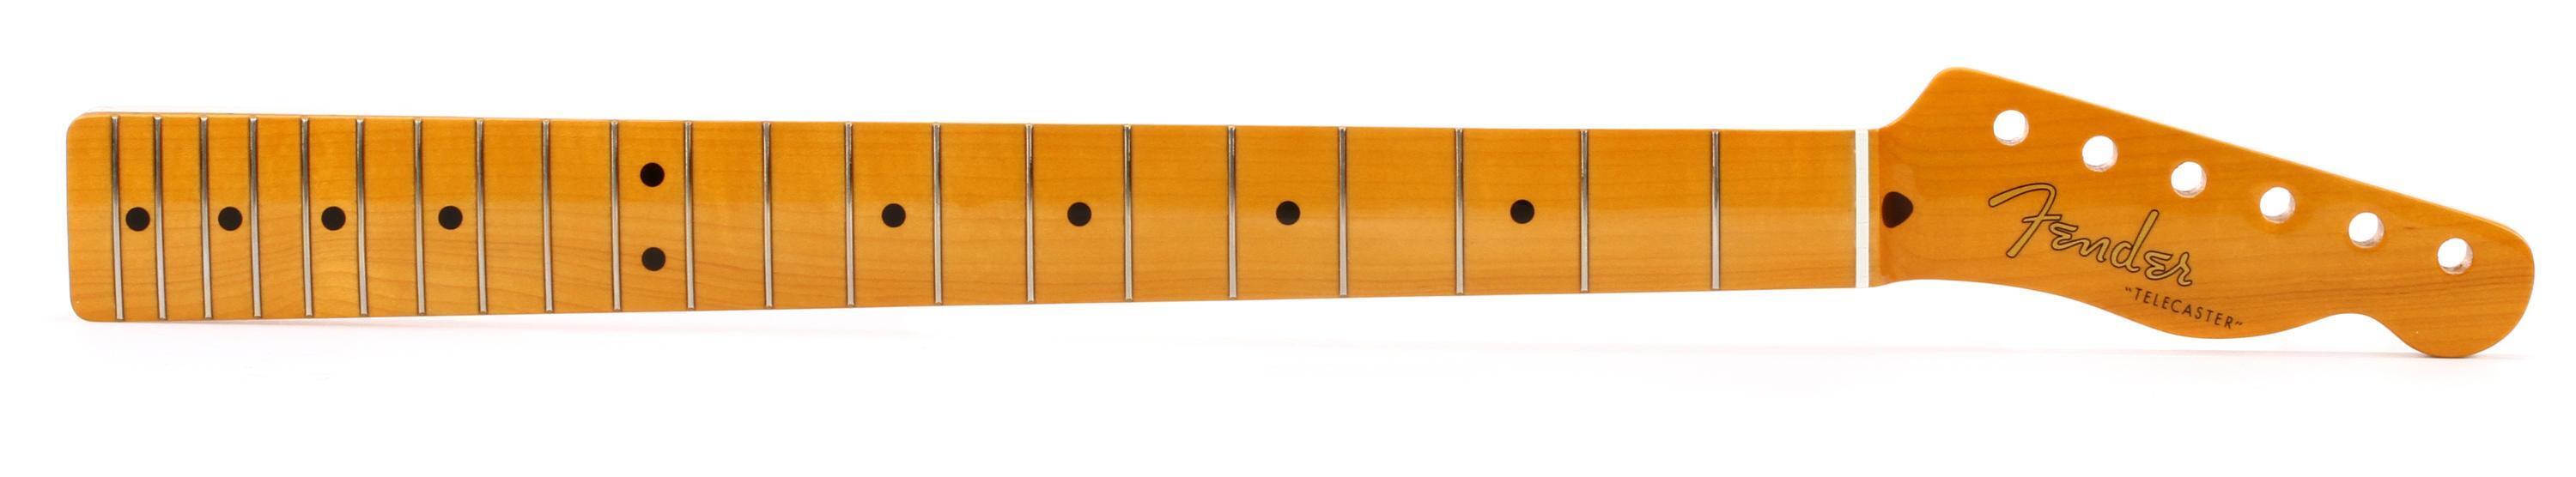 Fender Classic Series '50s Telecaster Neck - Maple Fingerboard